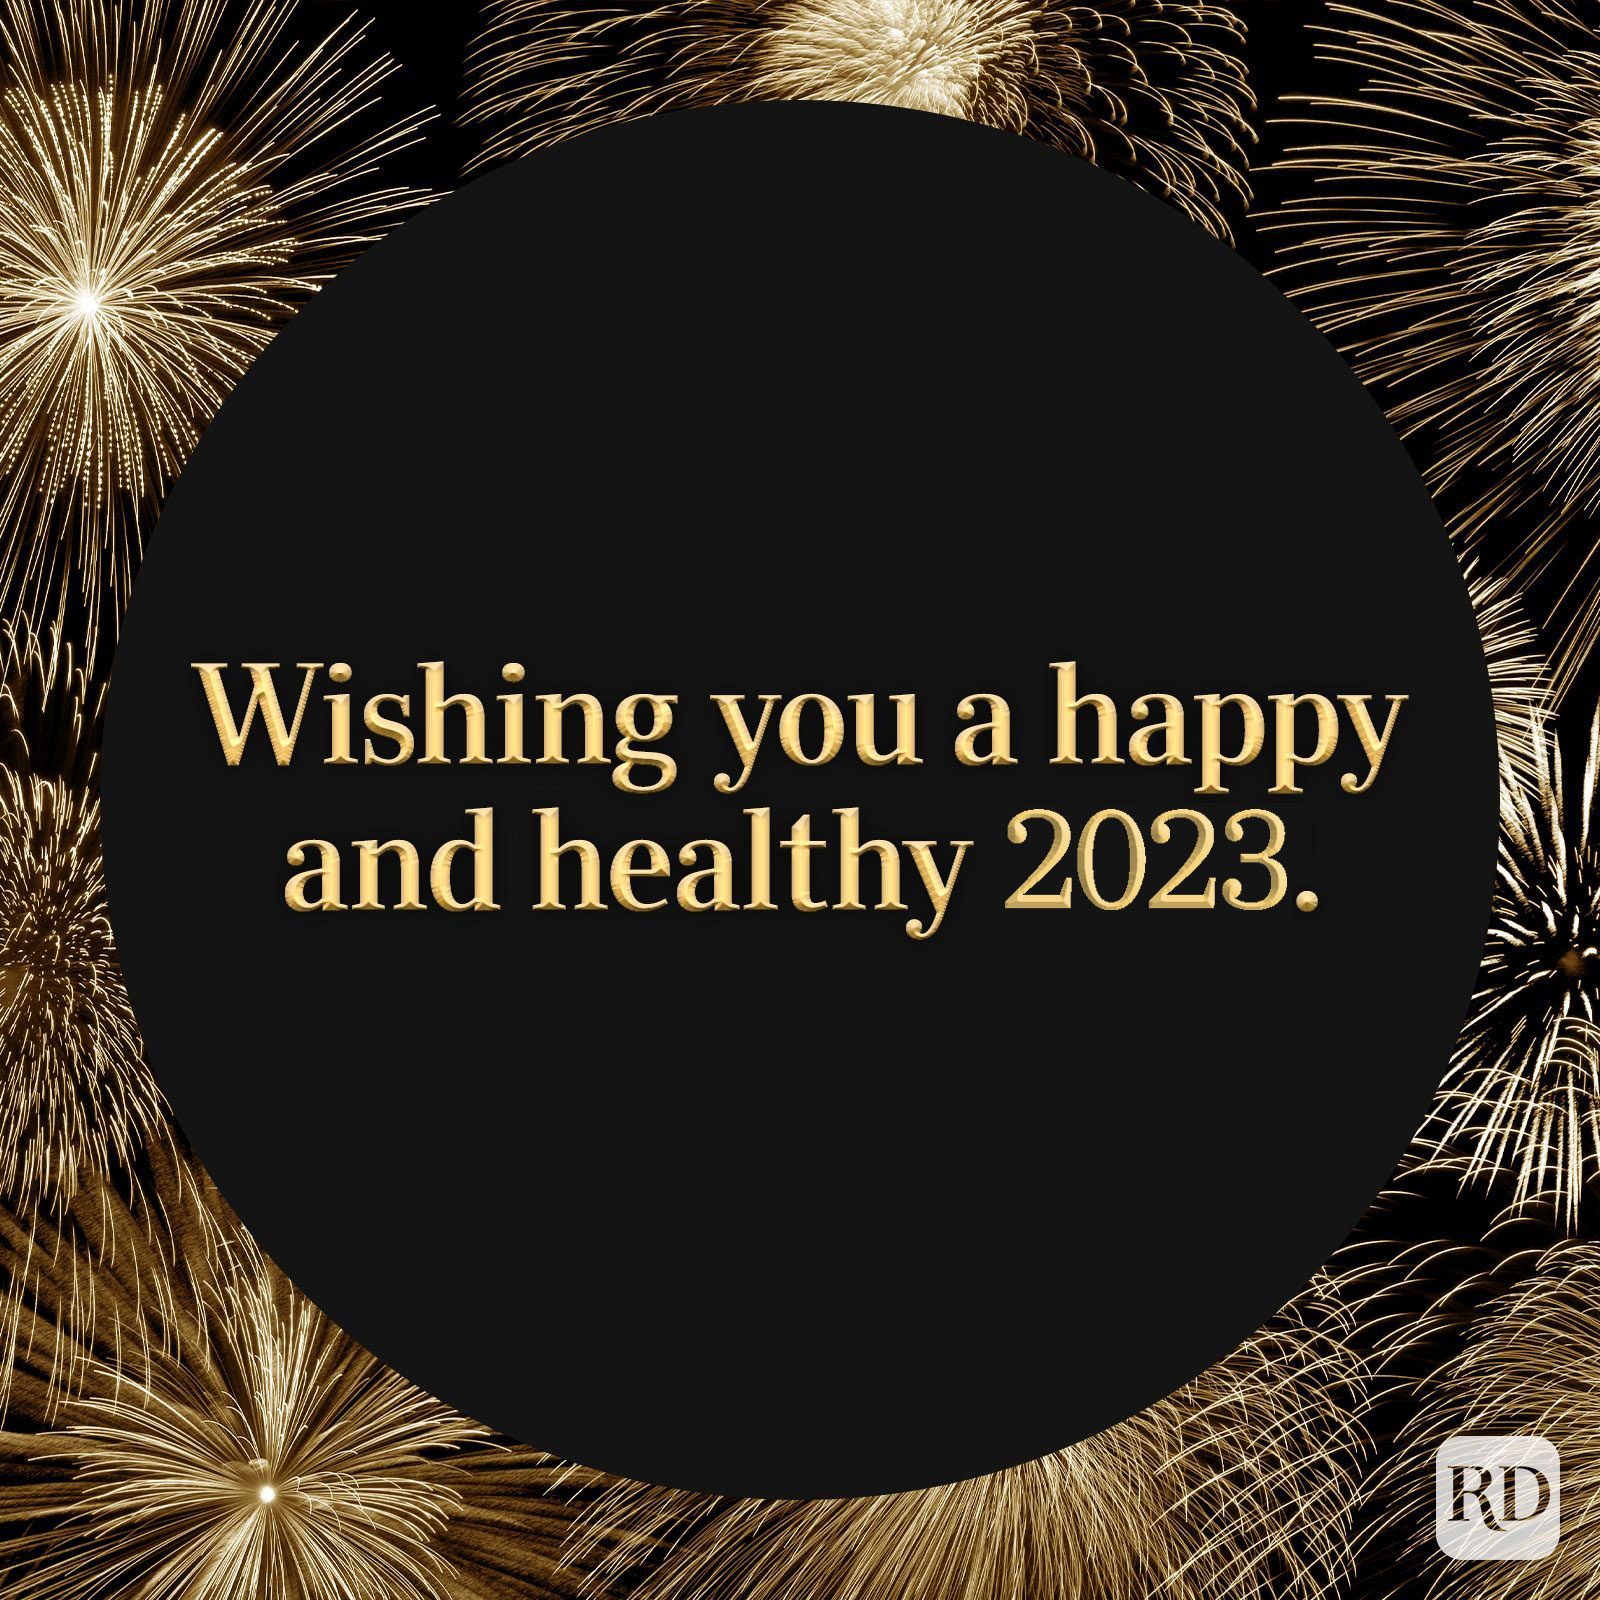 Happy New Year 2023!!!